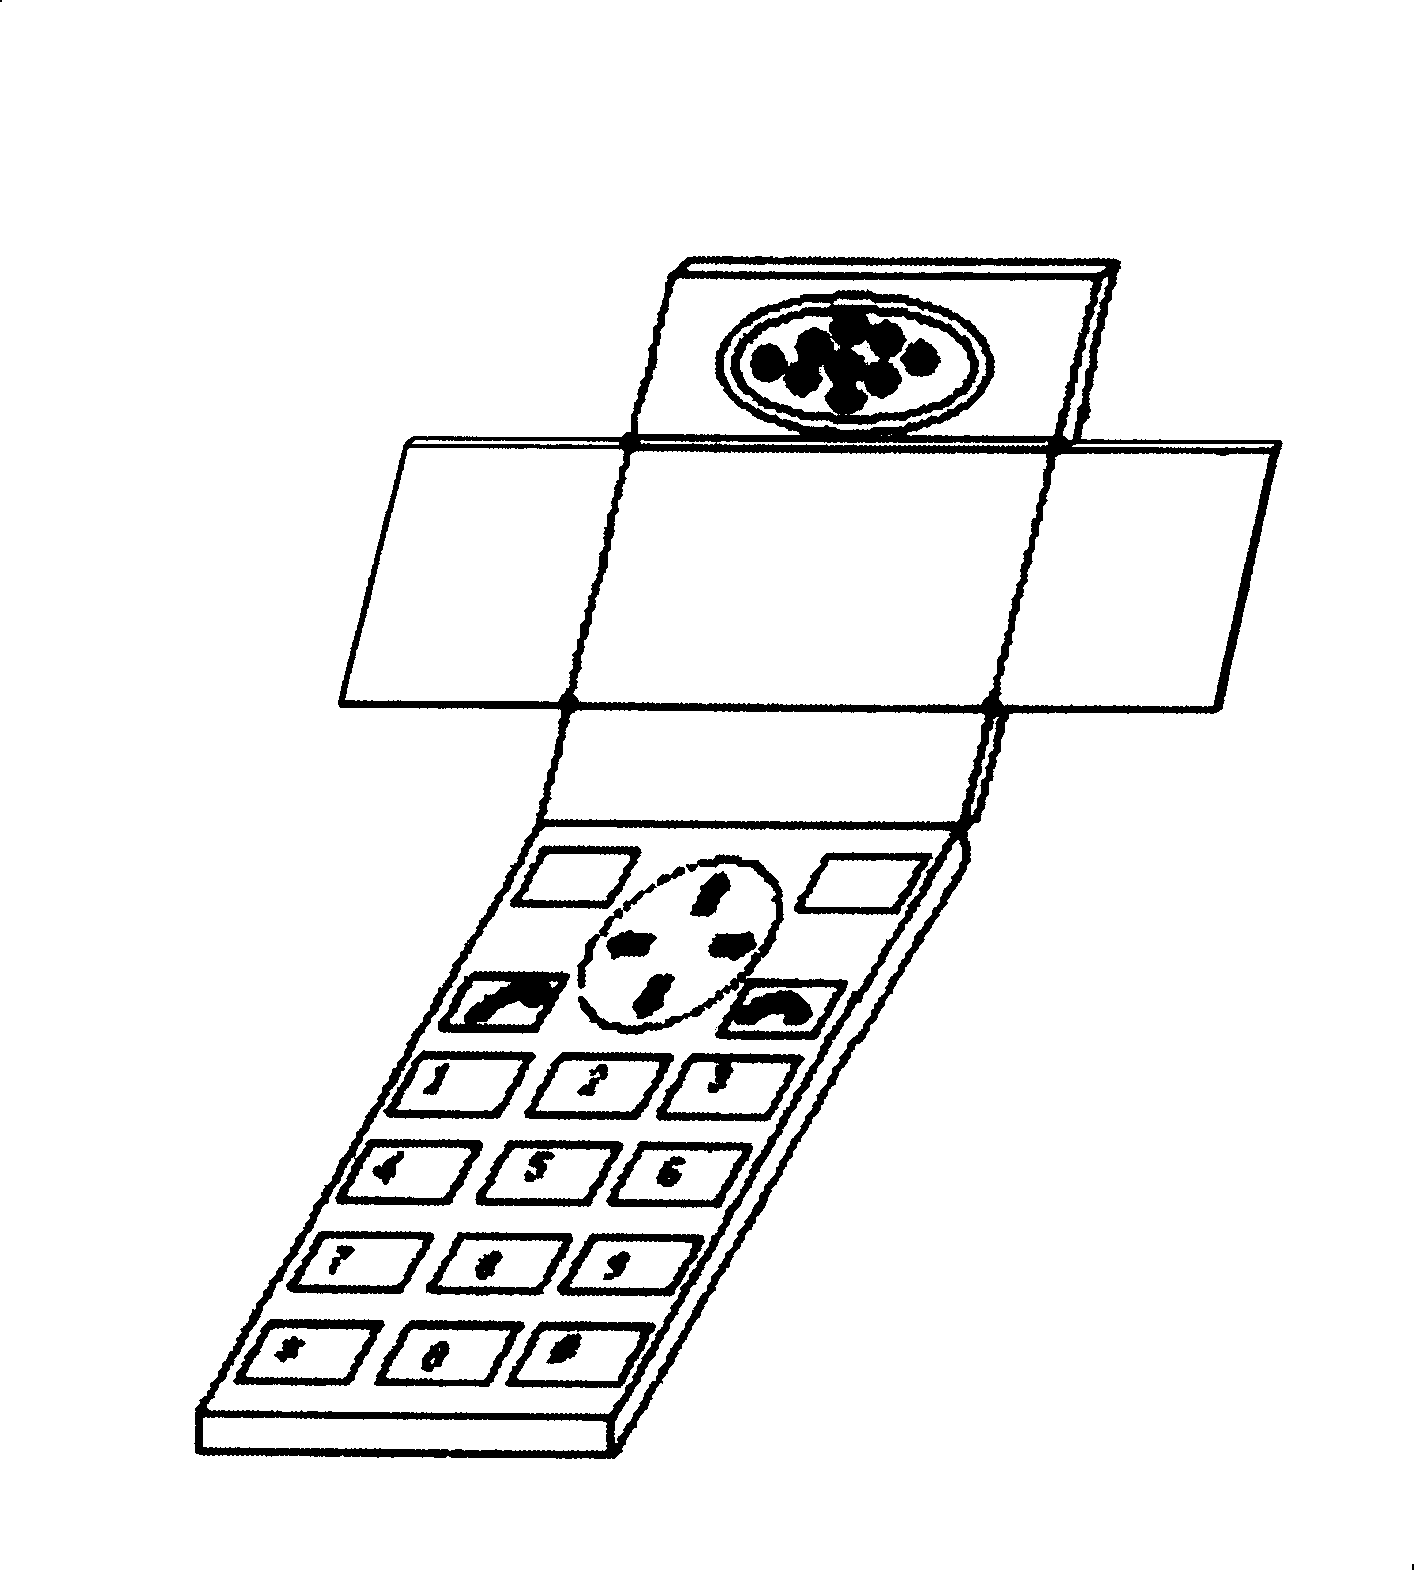 A foldable mobile communication terminal screen